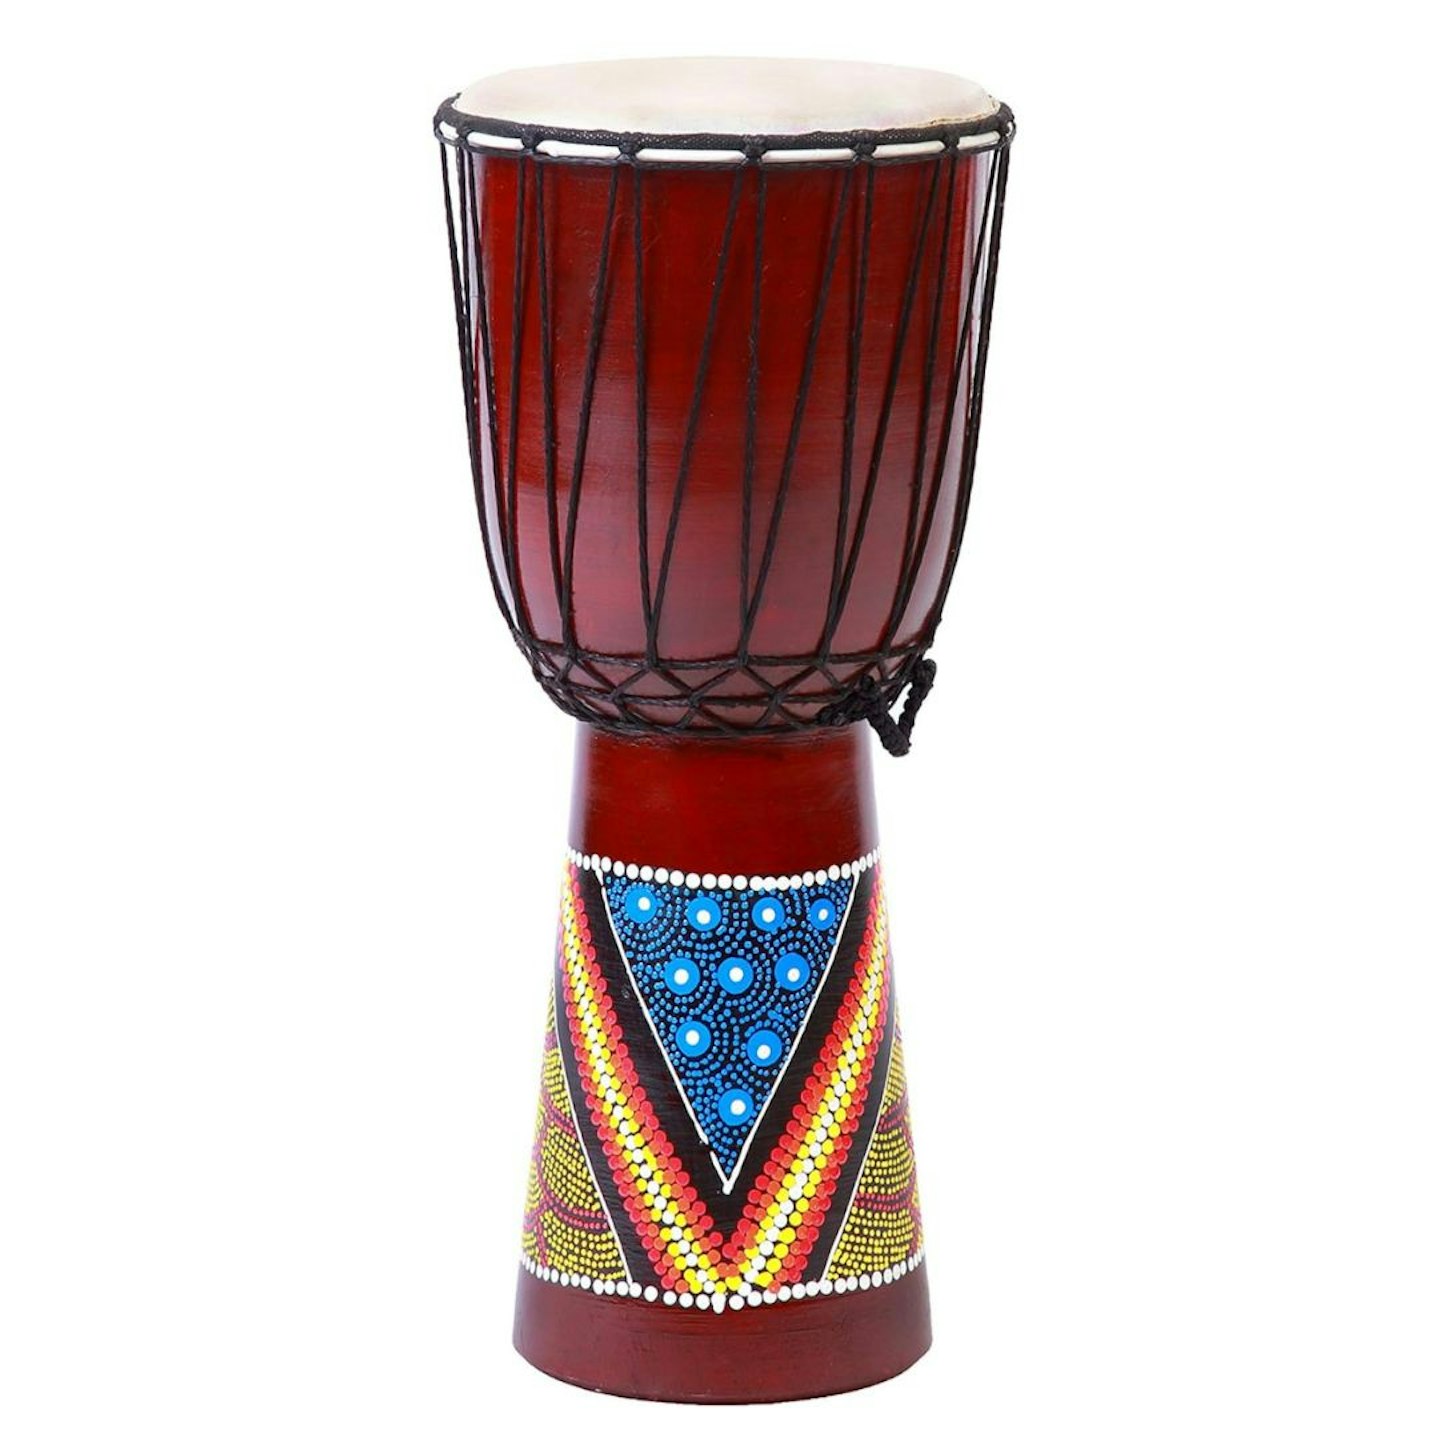 Best Diverse Toys: Children's djembe drum bongo hand-painted